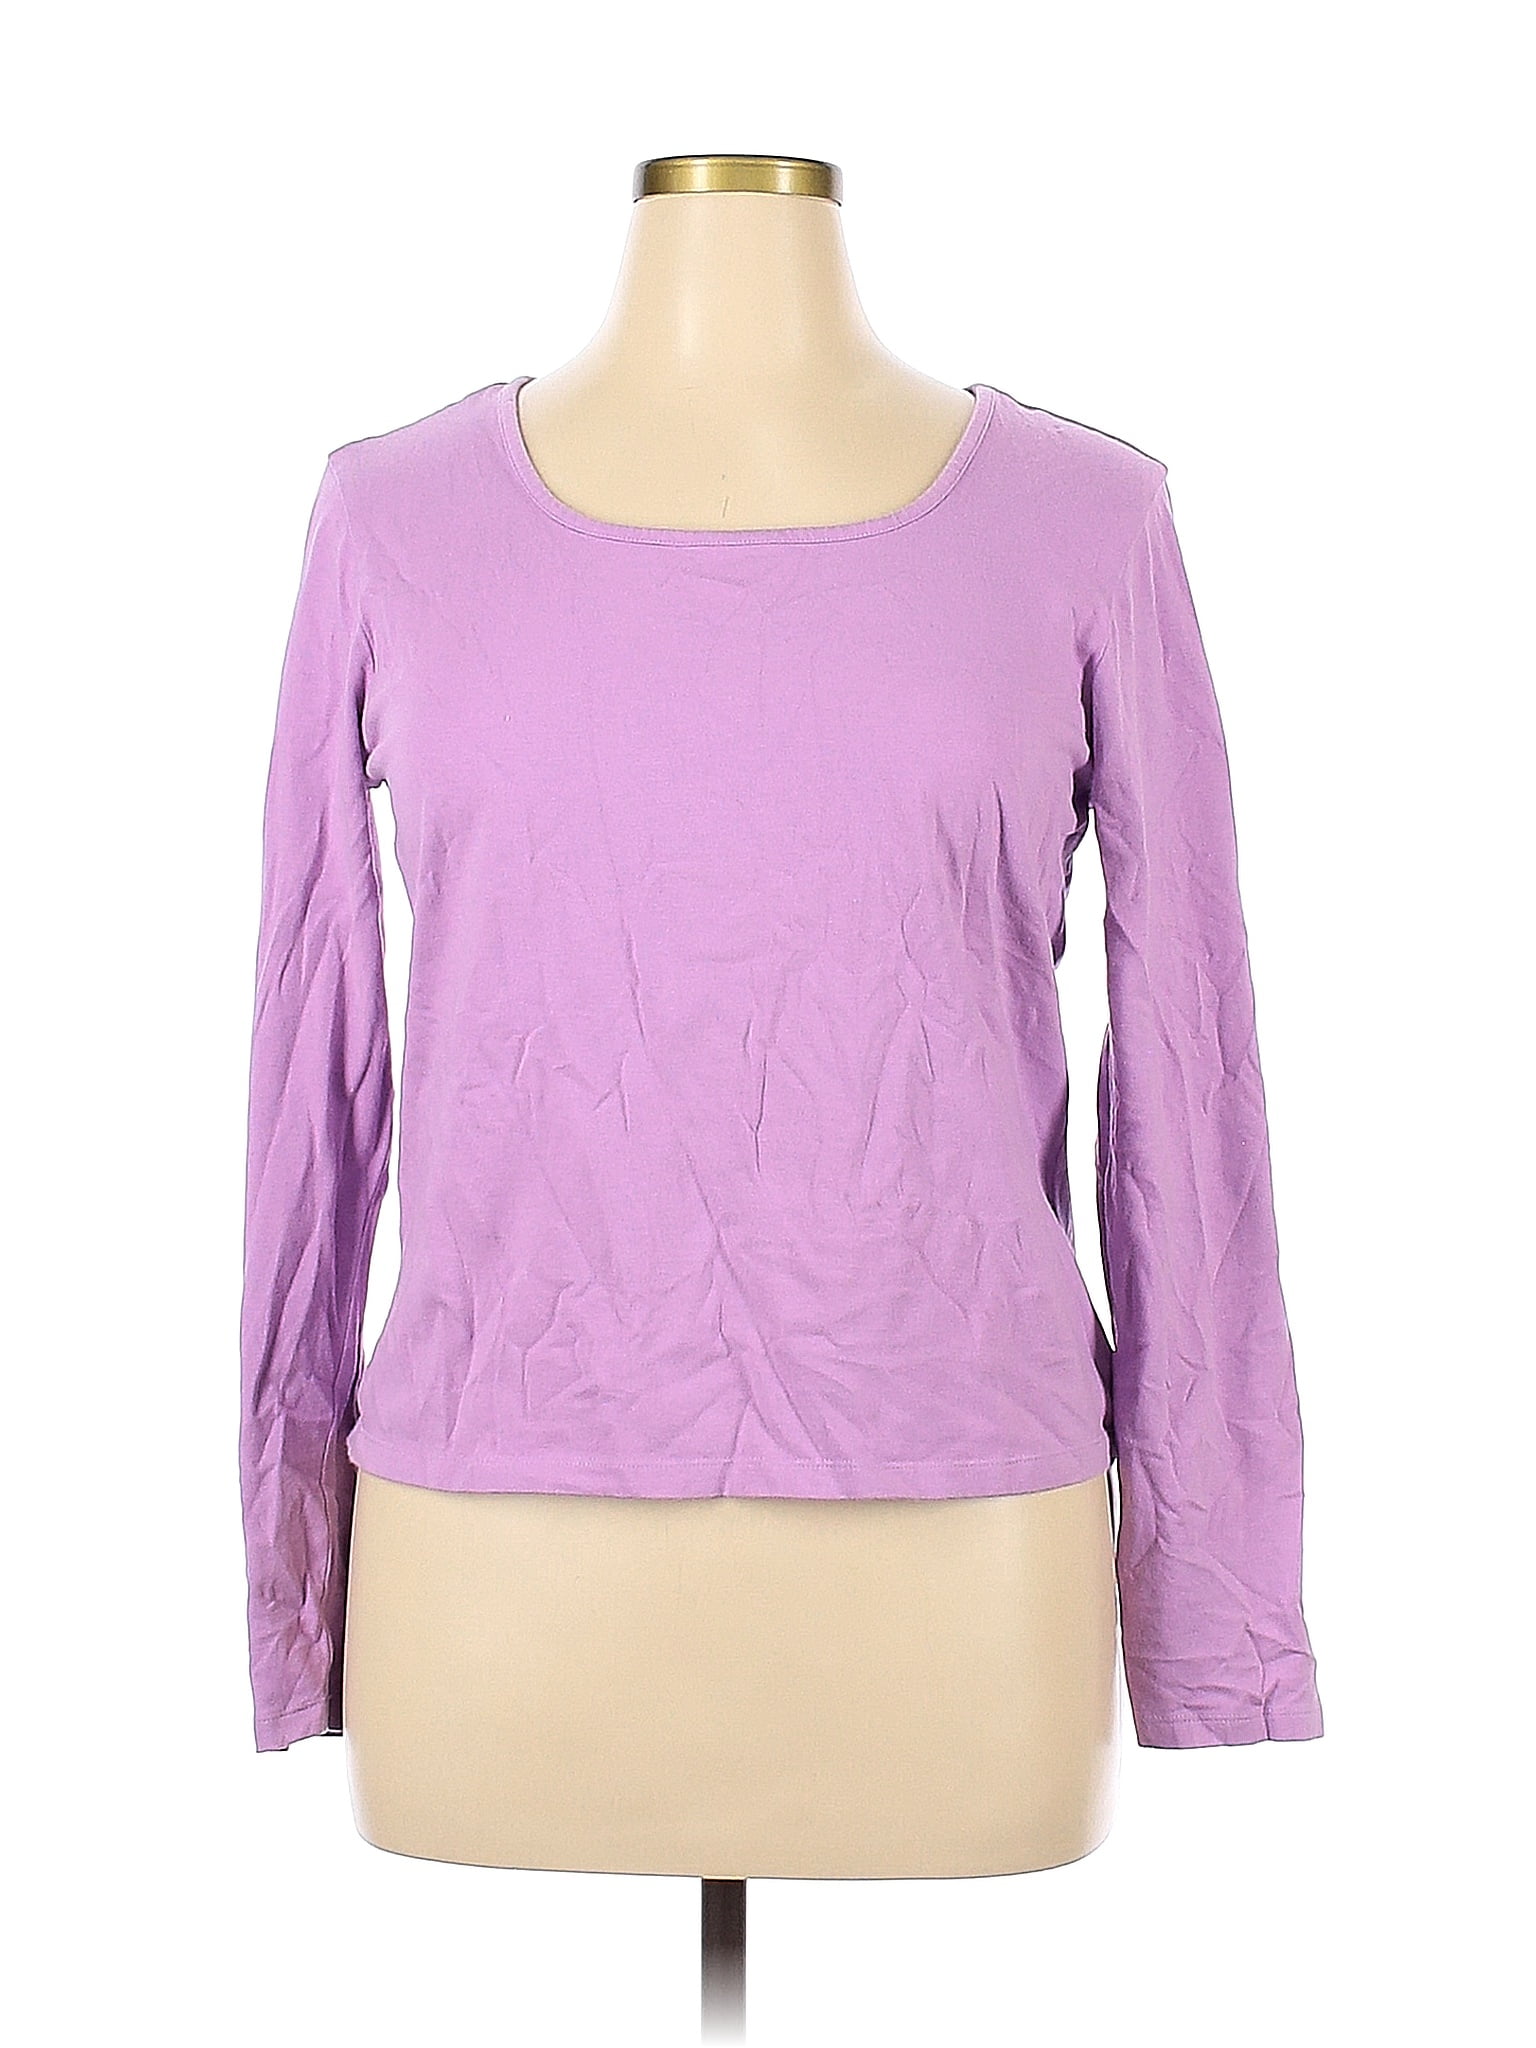 Chadwicks Purple Long Sleeve T-Shirt Size XL - 52% off | thredUP